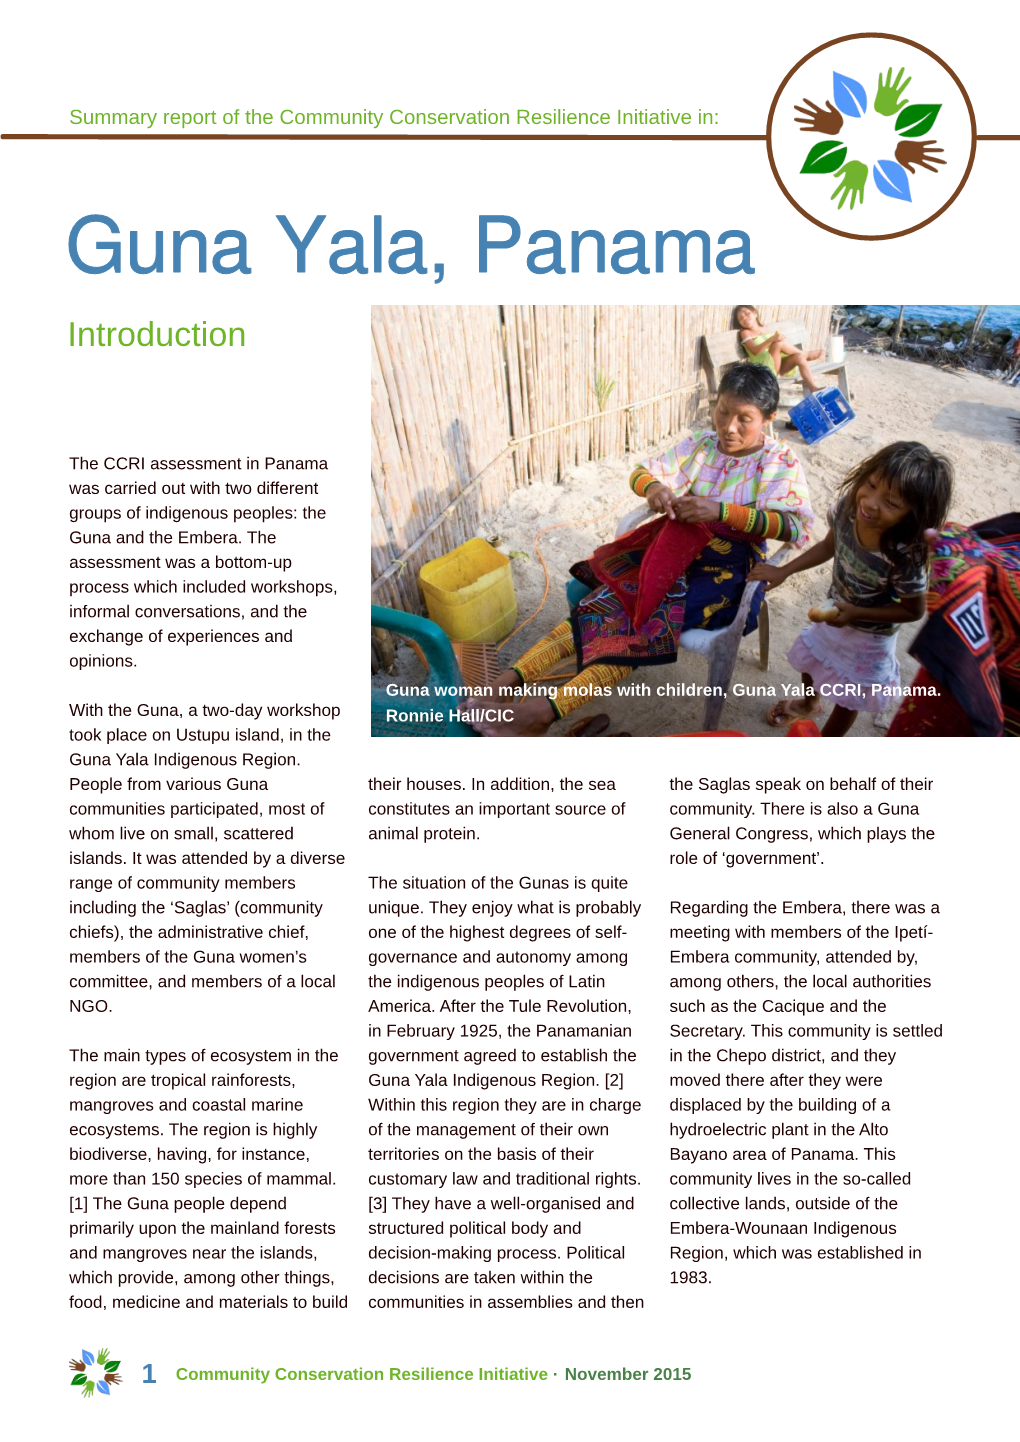 Guna Yala, Panama Introduction